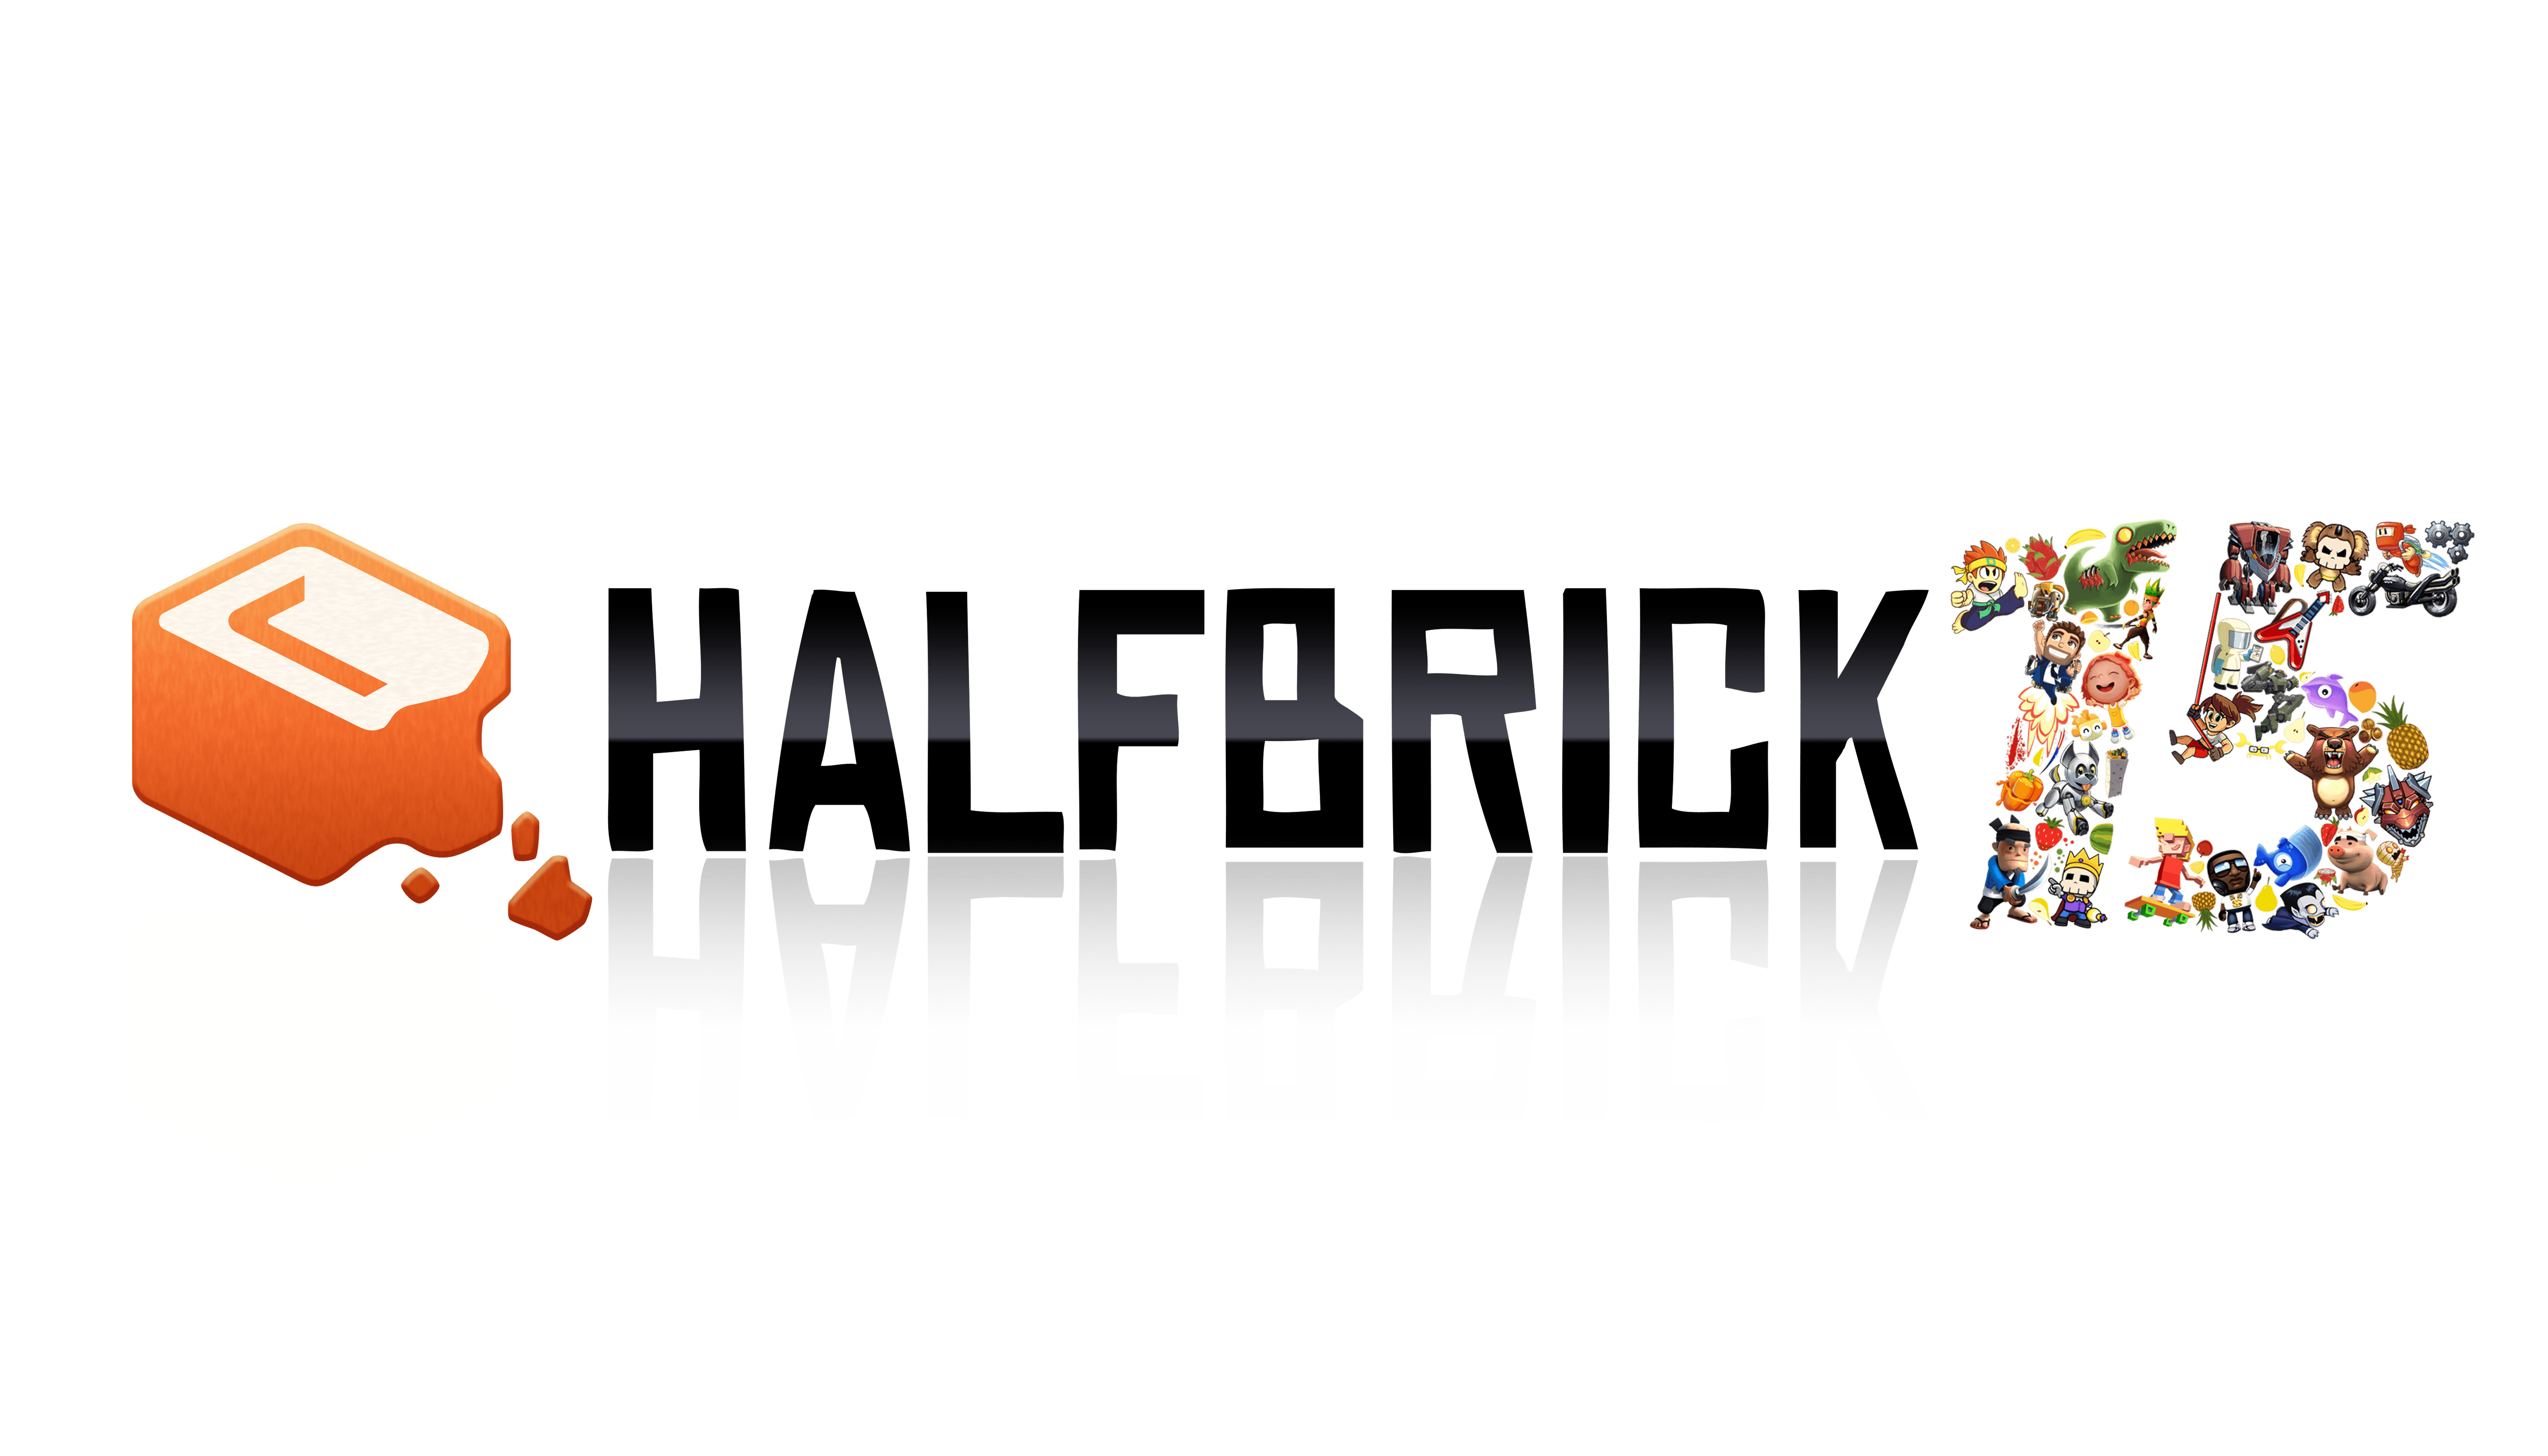 Halfbrick Logo - Halfbrick 15: Join the celebrations! - Halfbrick Studios Halfbrick ...